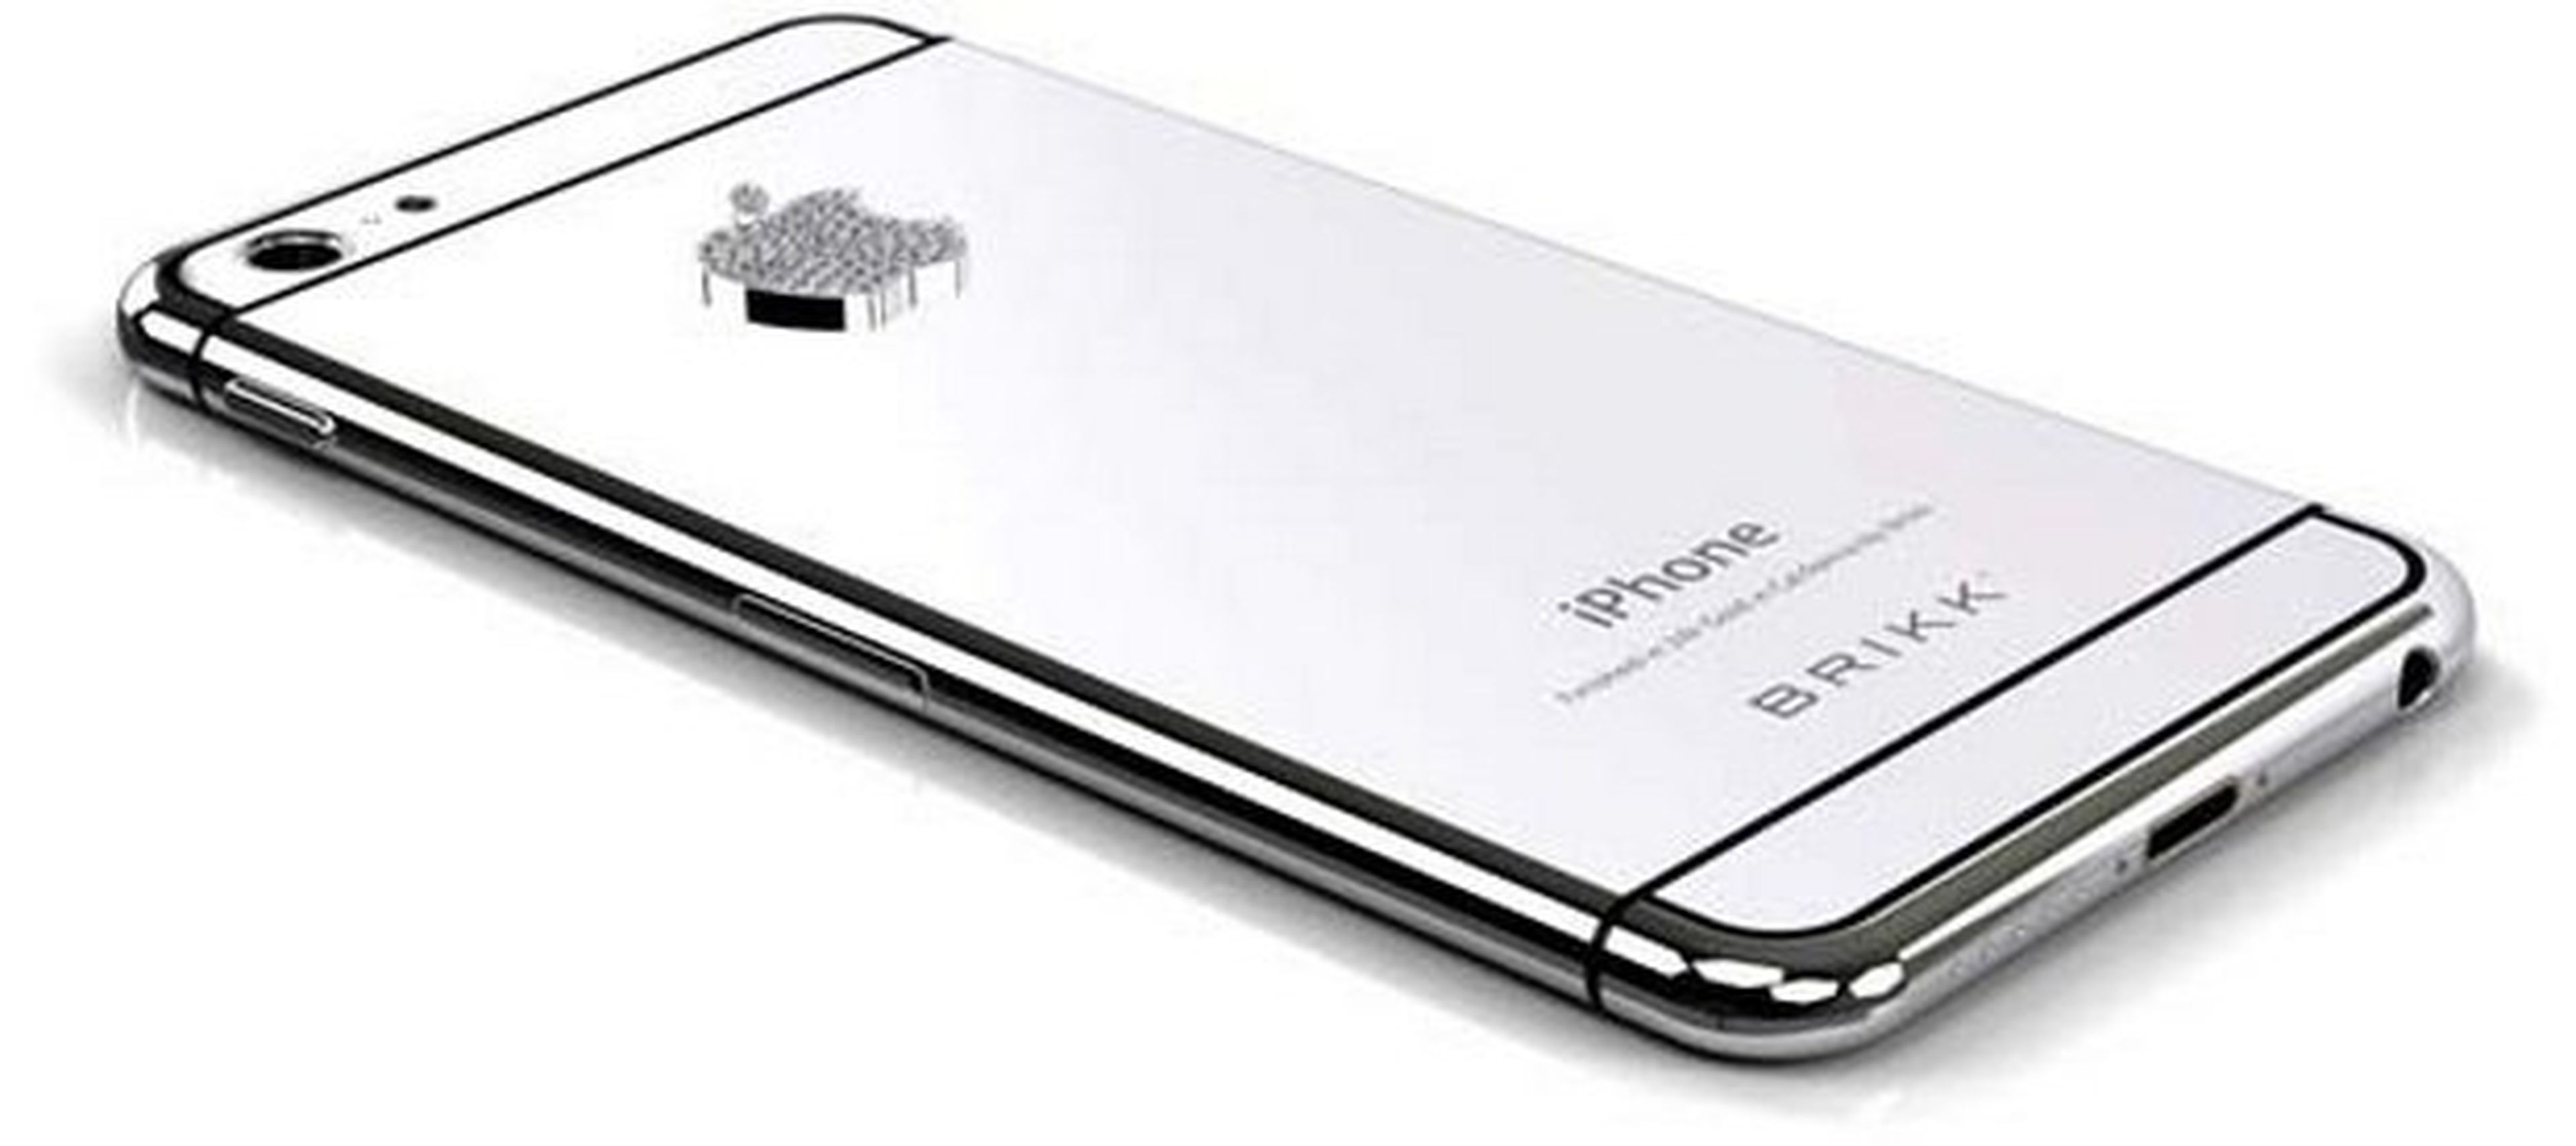 iPhone 6 carcasa de platino